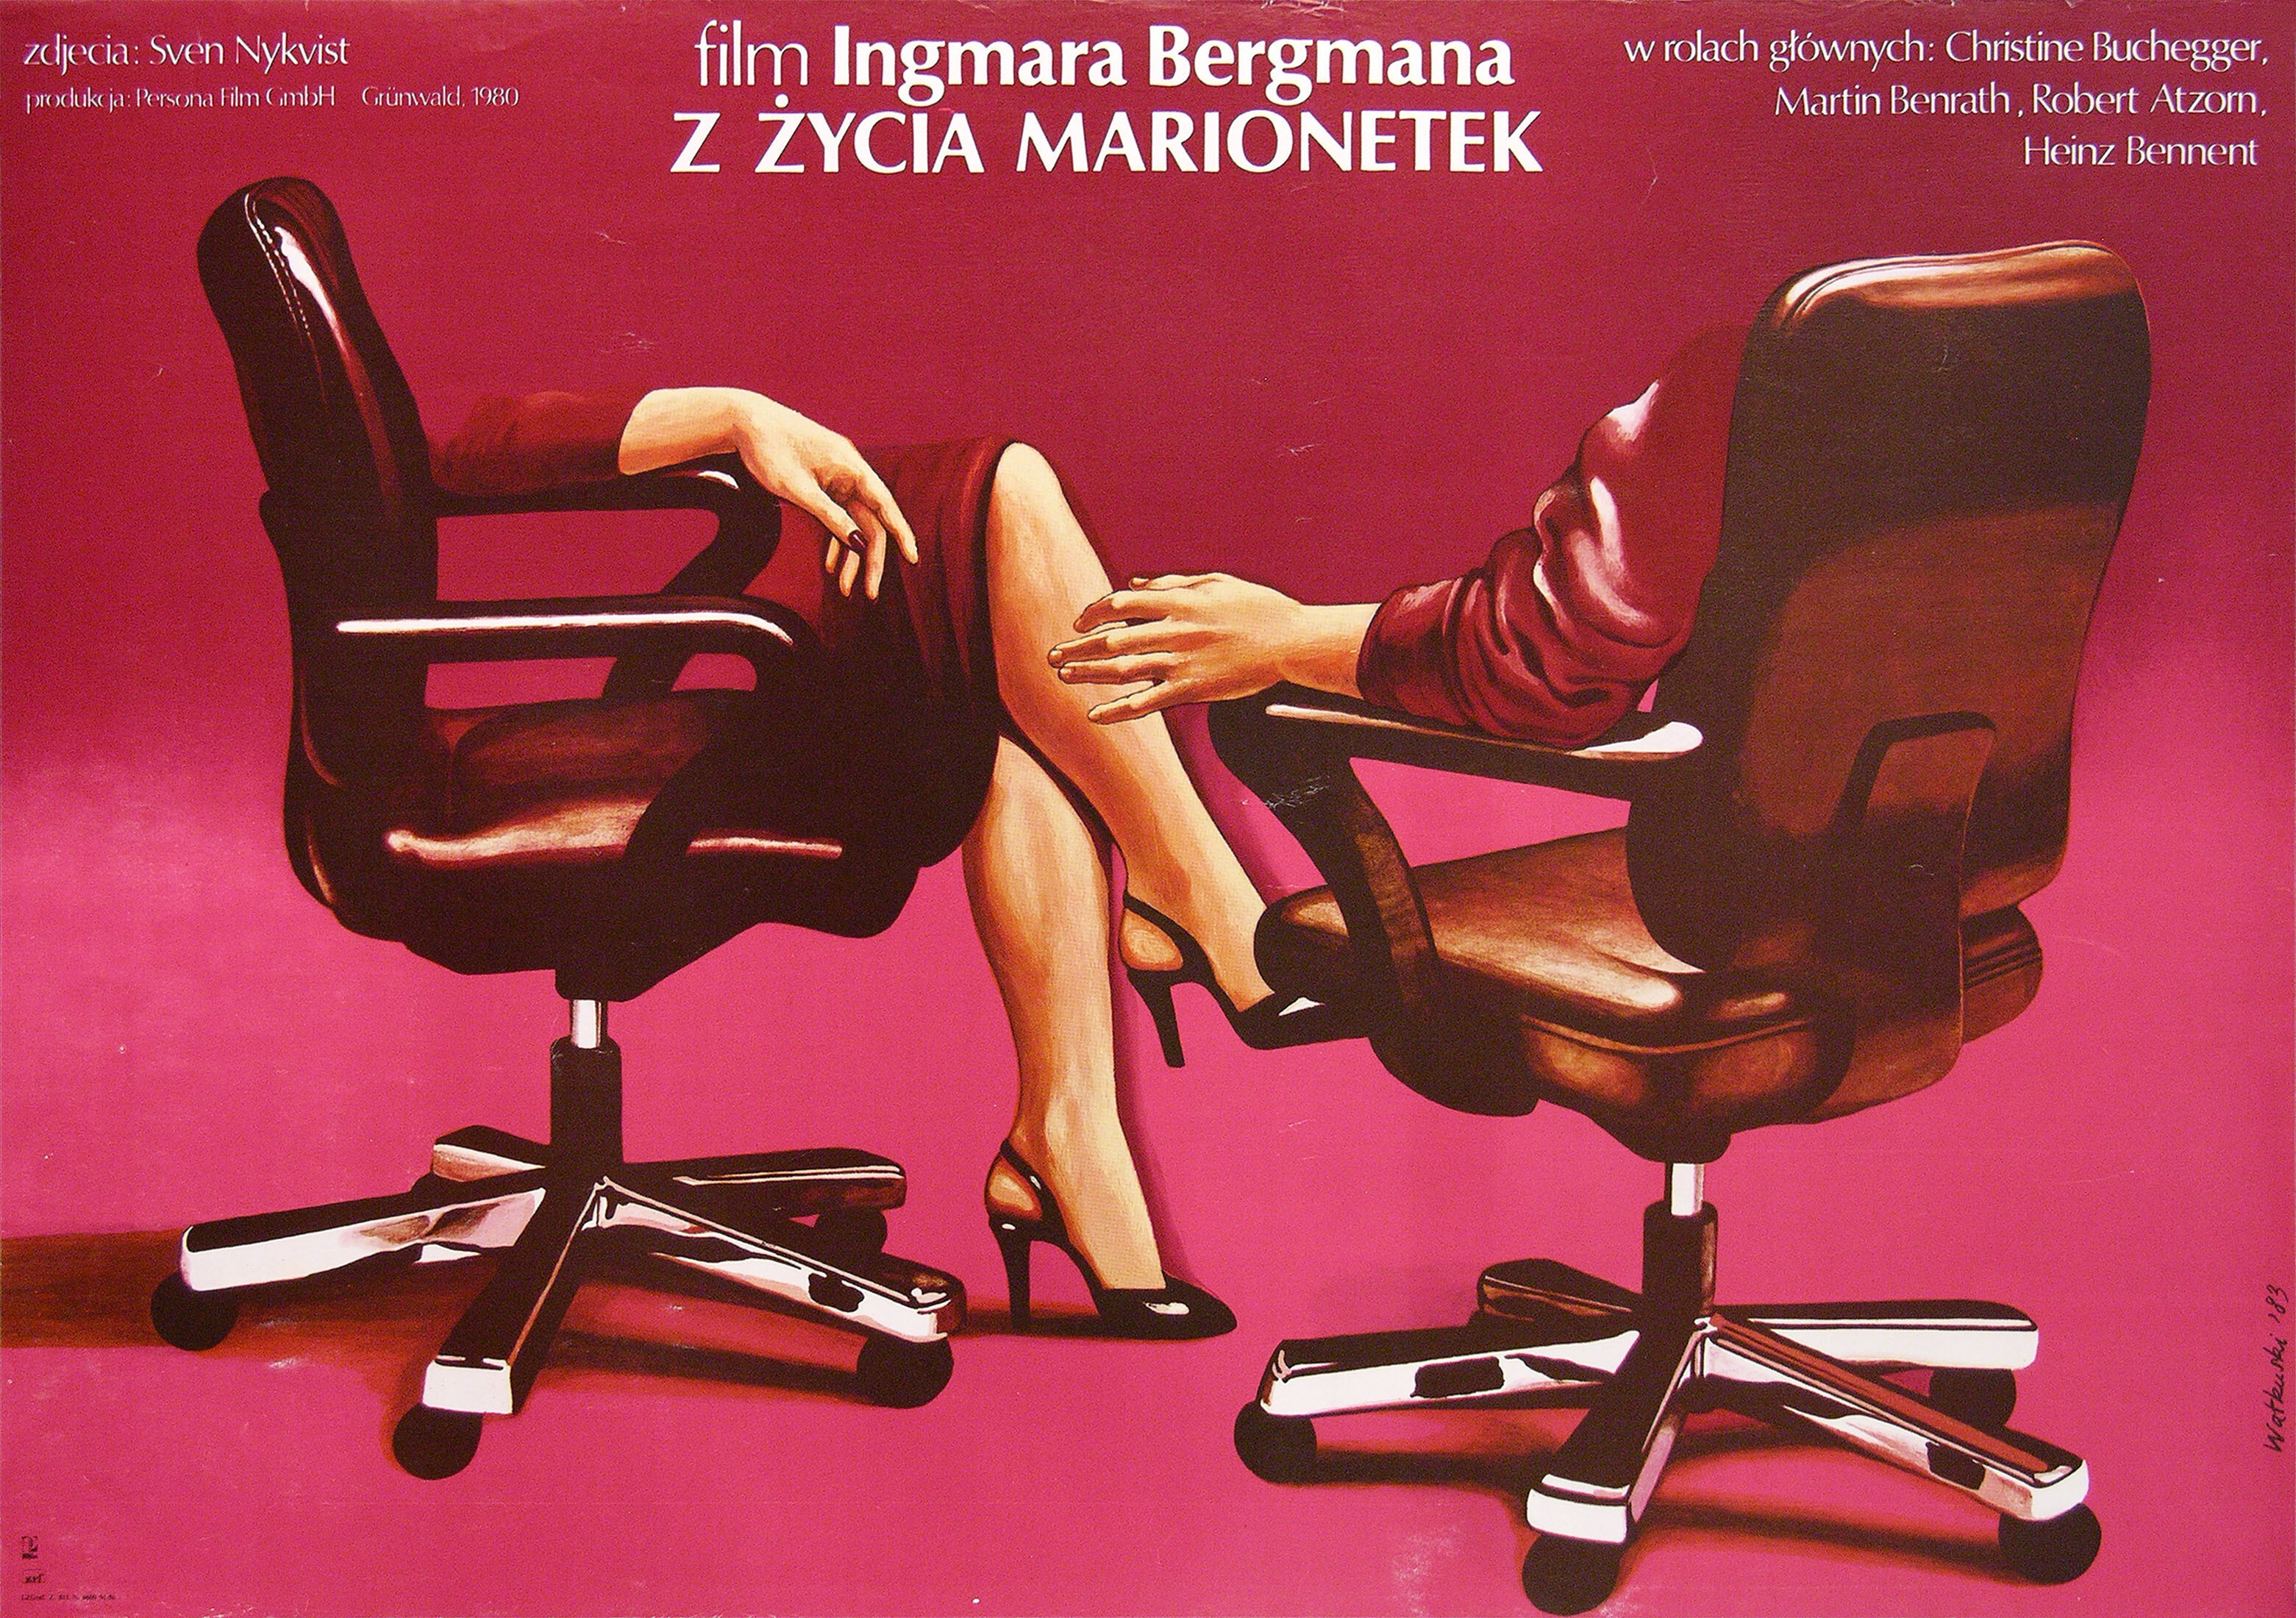 Из жизни марионеток (From the Life of the Marionettes, 1980), режиссёр Ингмар Бергман, польский плакат к фильму, 1983 год, автор Веслав Валкуски